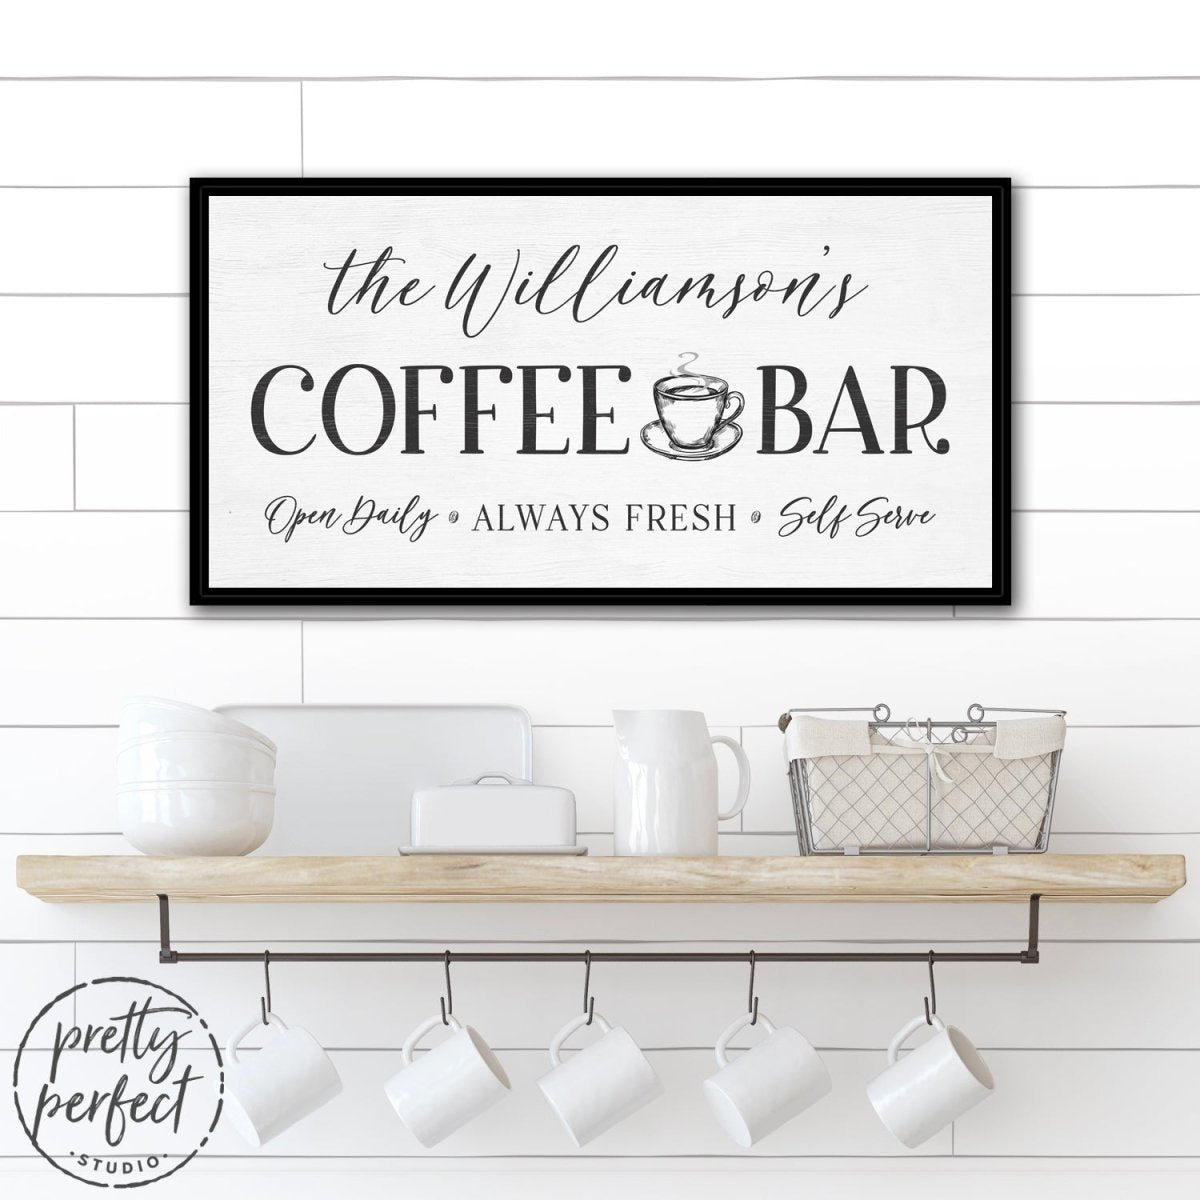 Coffee Shop Custom Sign on Wall Above Shelf in Kitchen - Pretty Perfect Studio